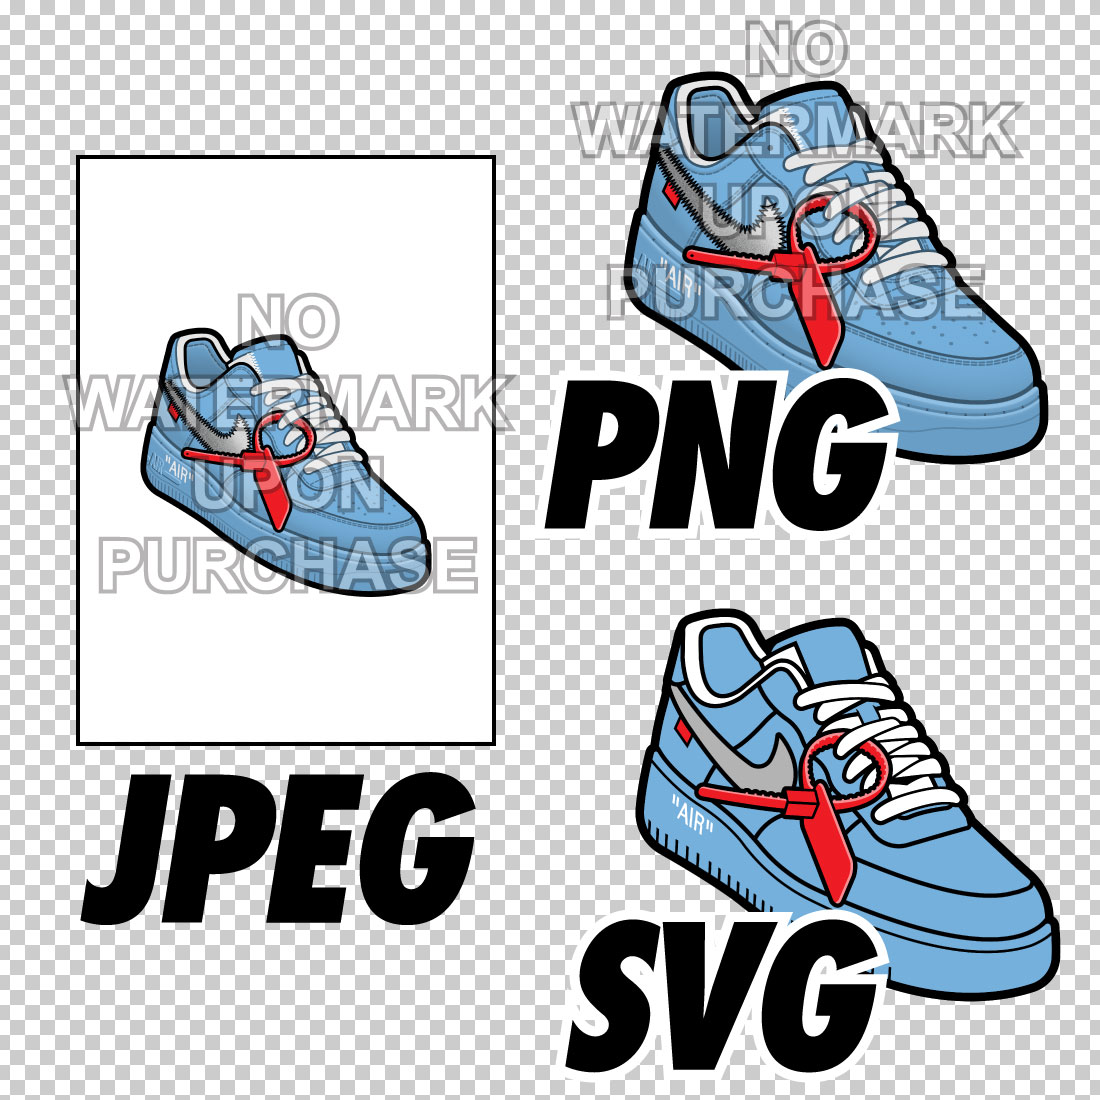 Air Force 1 Off White MCA University Blue Left & Right shoe bundle JPEG PNG SVG digital download preview image.